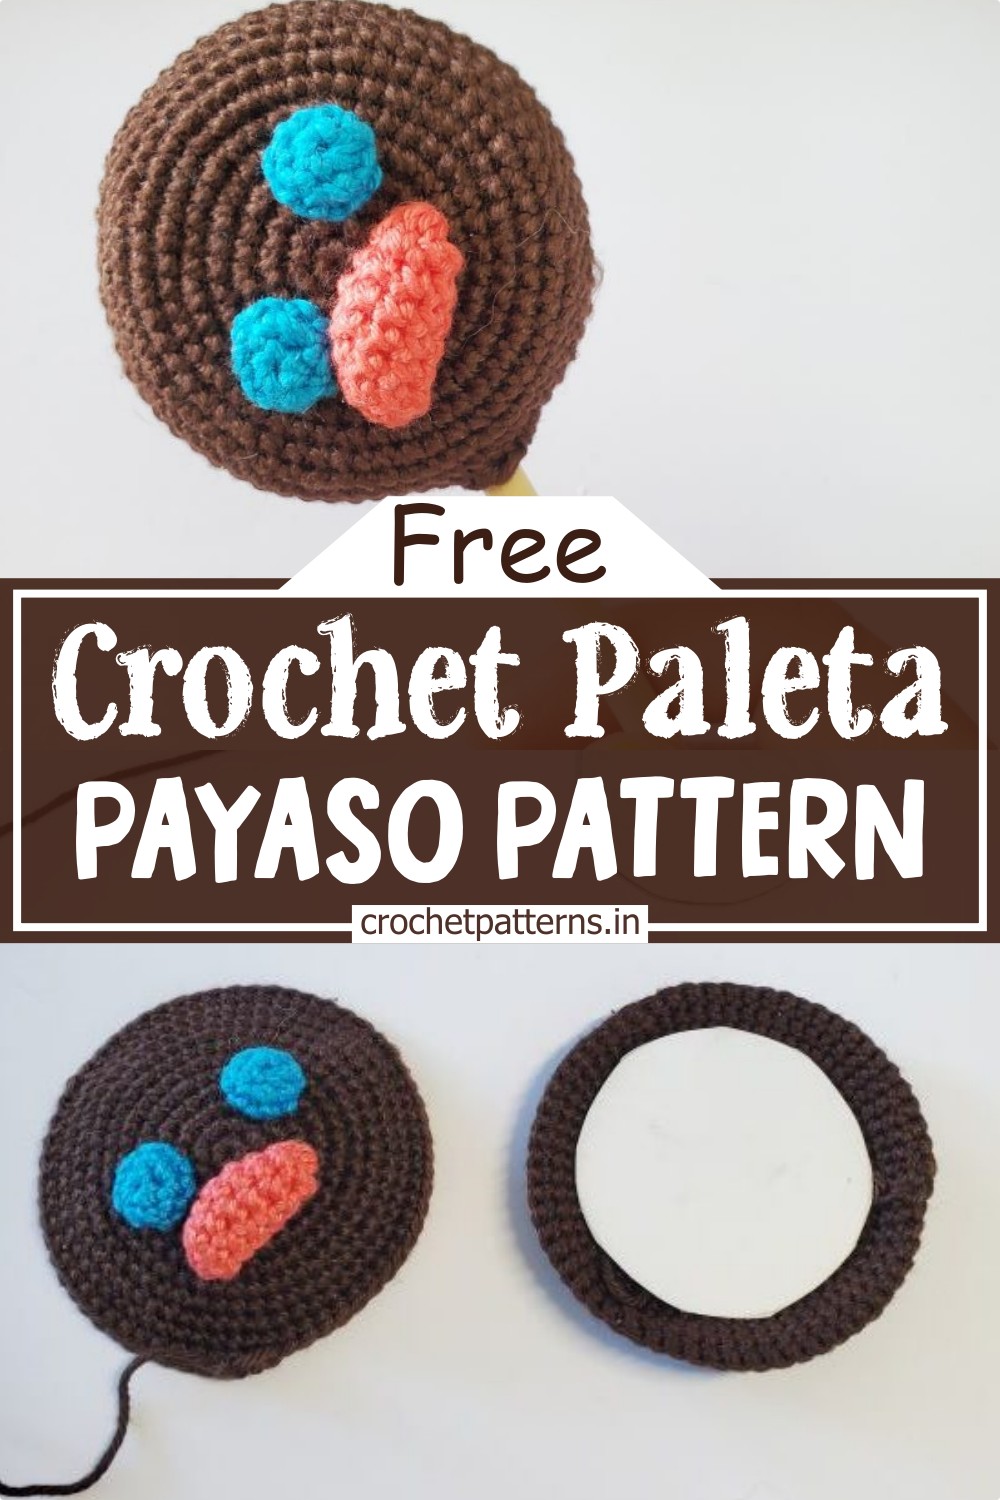 Crochet Paleta Payaso Pattern